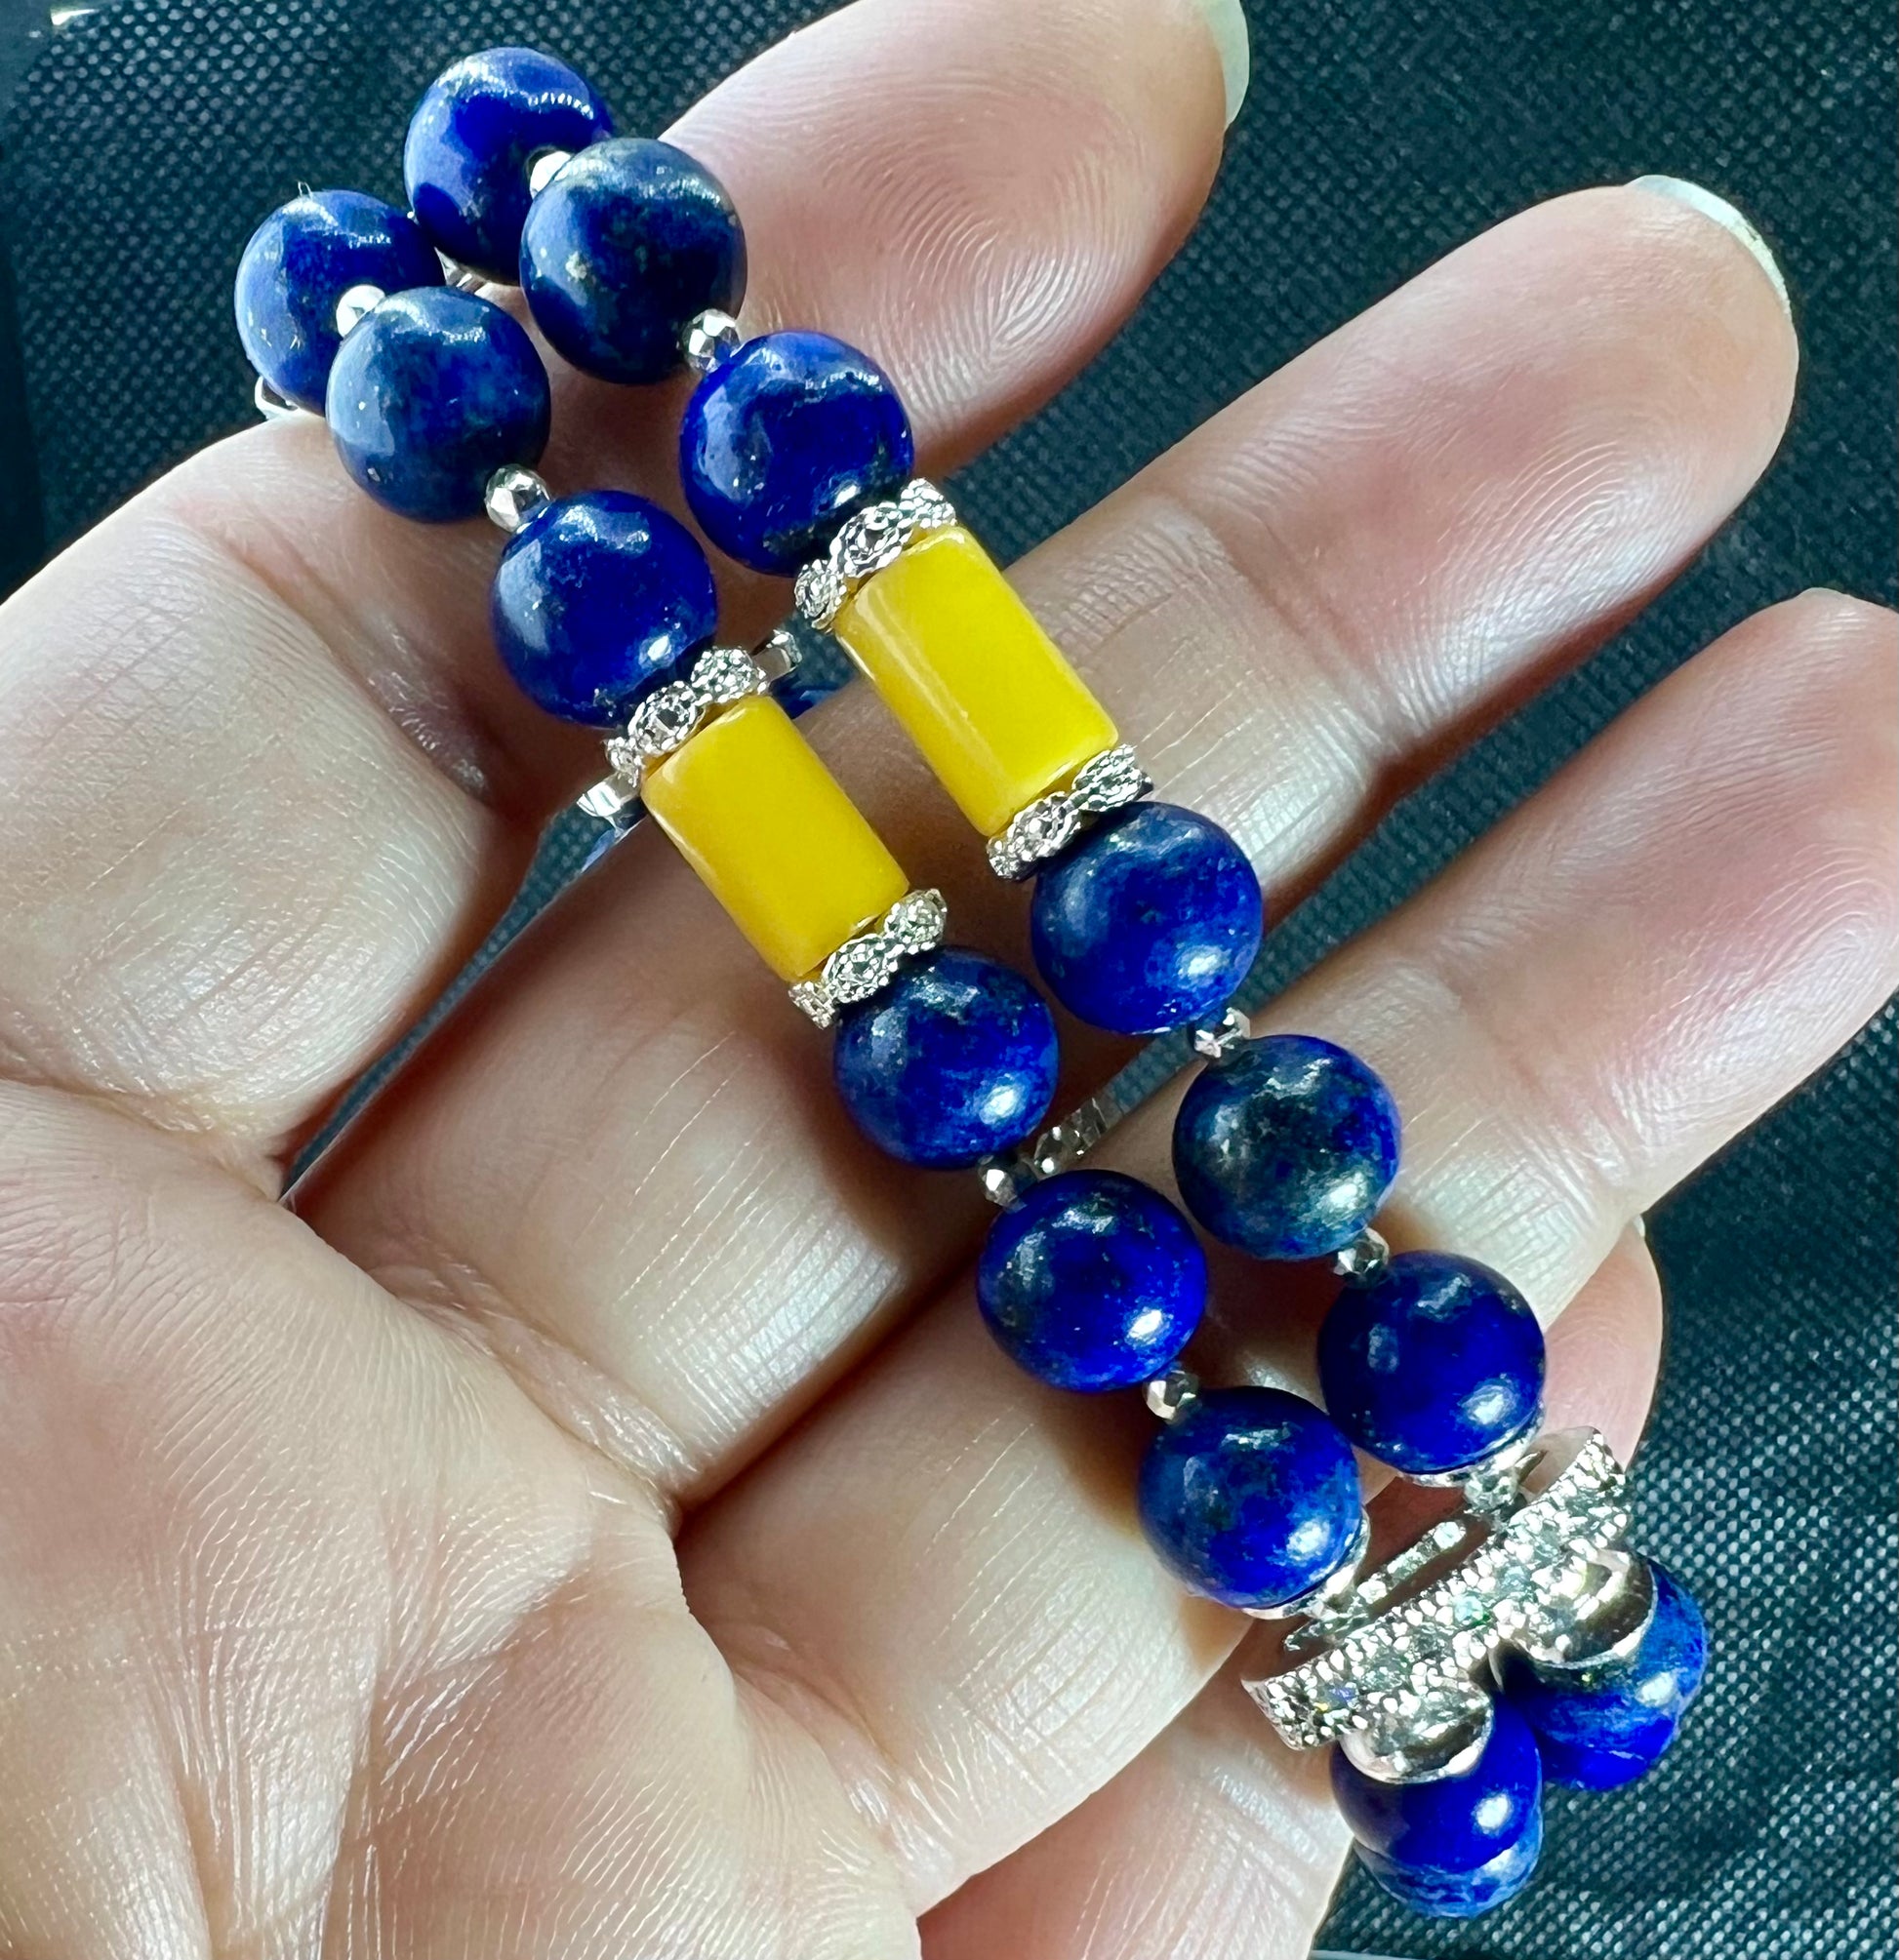 double lapislazuli bernstein armband blau und gelb armband bracelet silver plated versilbert handmade 